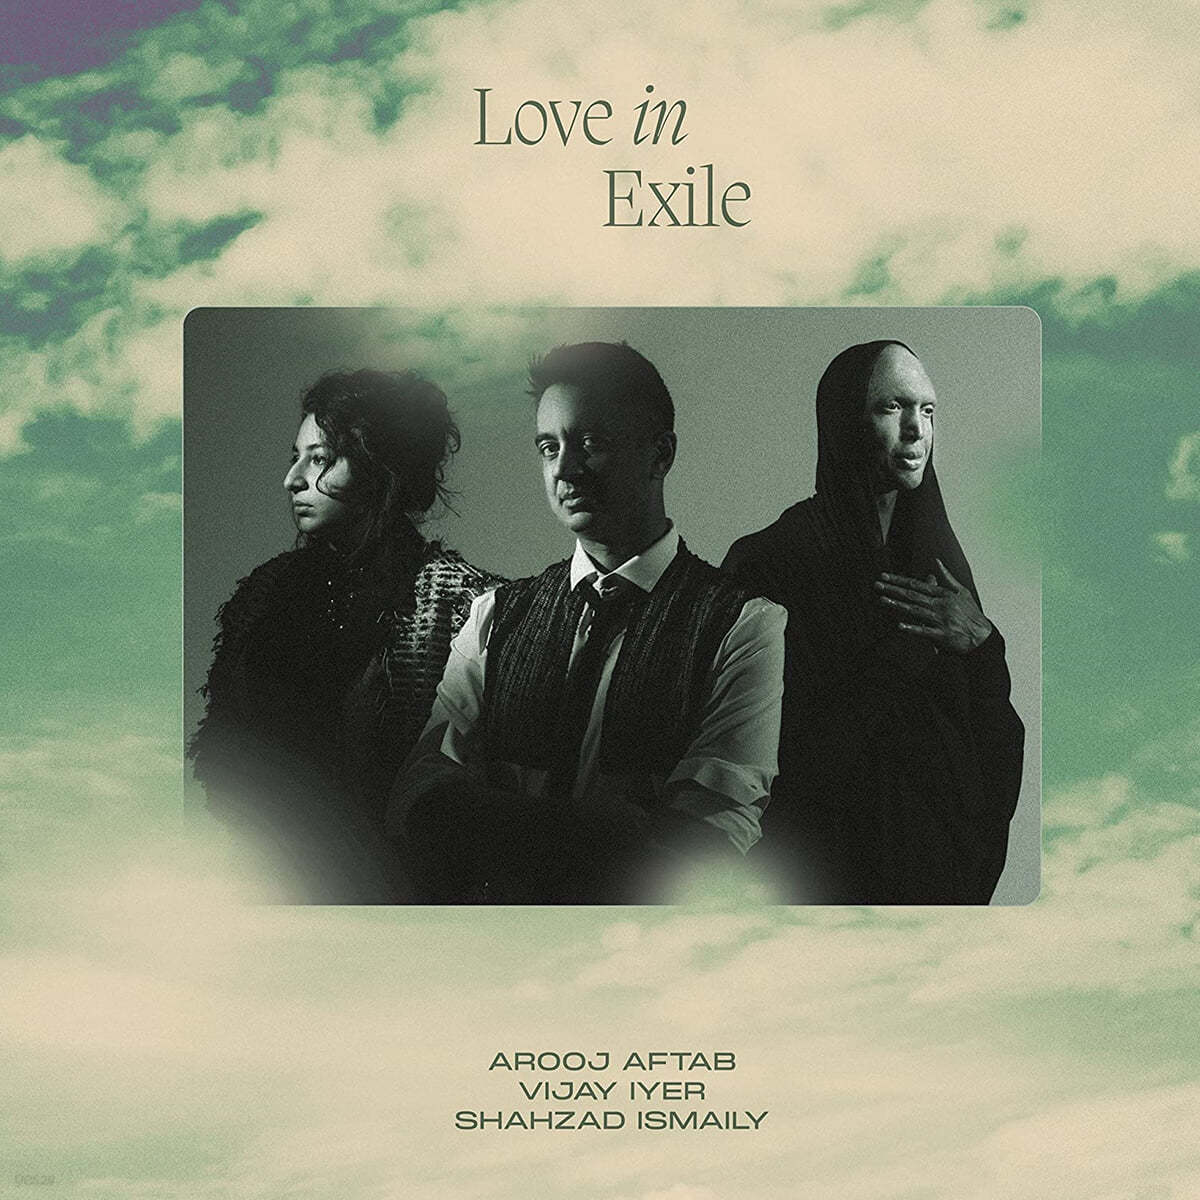 Arooj Aftab / Vijay Iyer / Shahzad Ismaily (아루즈 아프타브 / 비제이 예어 / 샤파드 이스마일리) - Love In Exile [2LP]